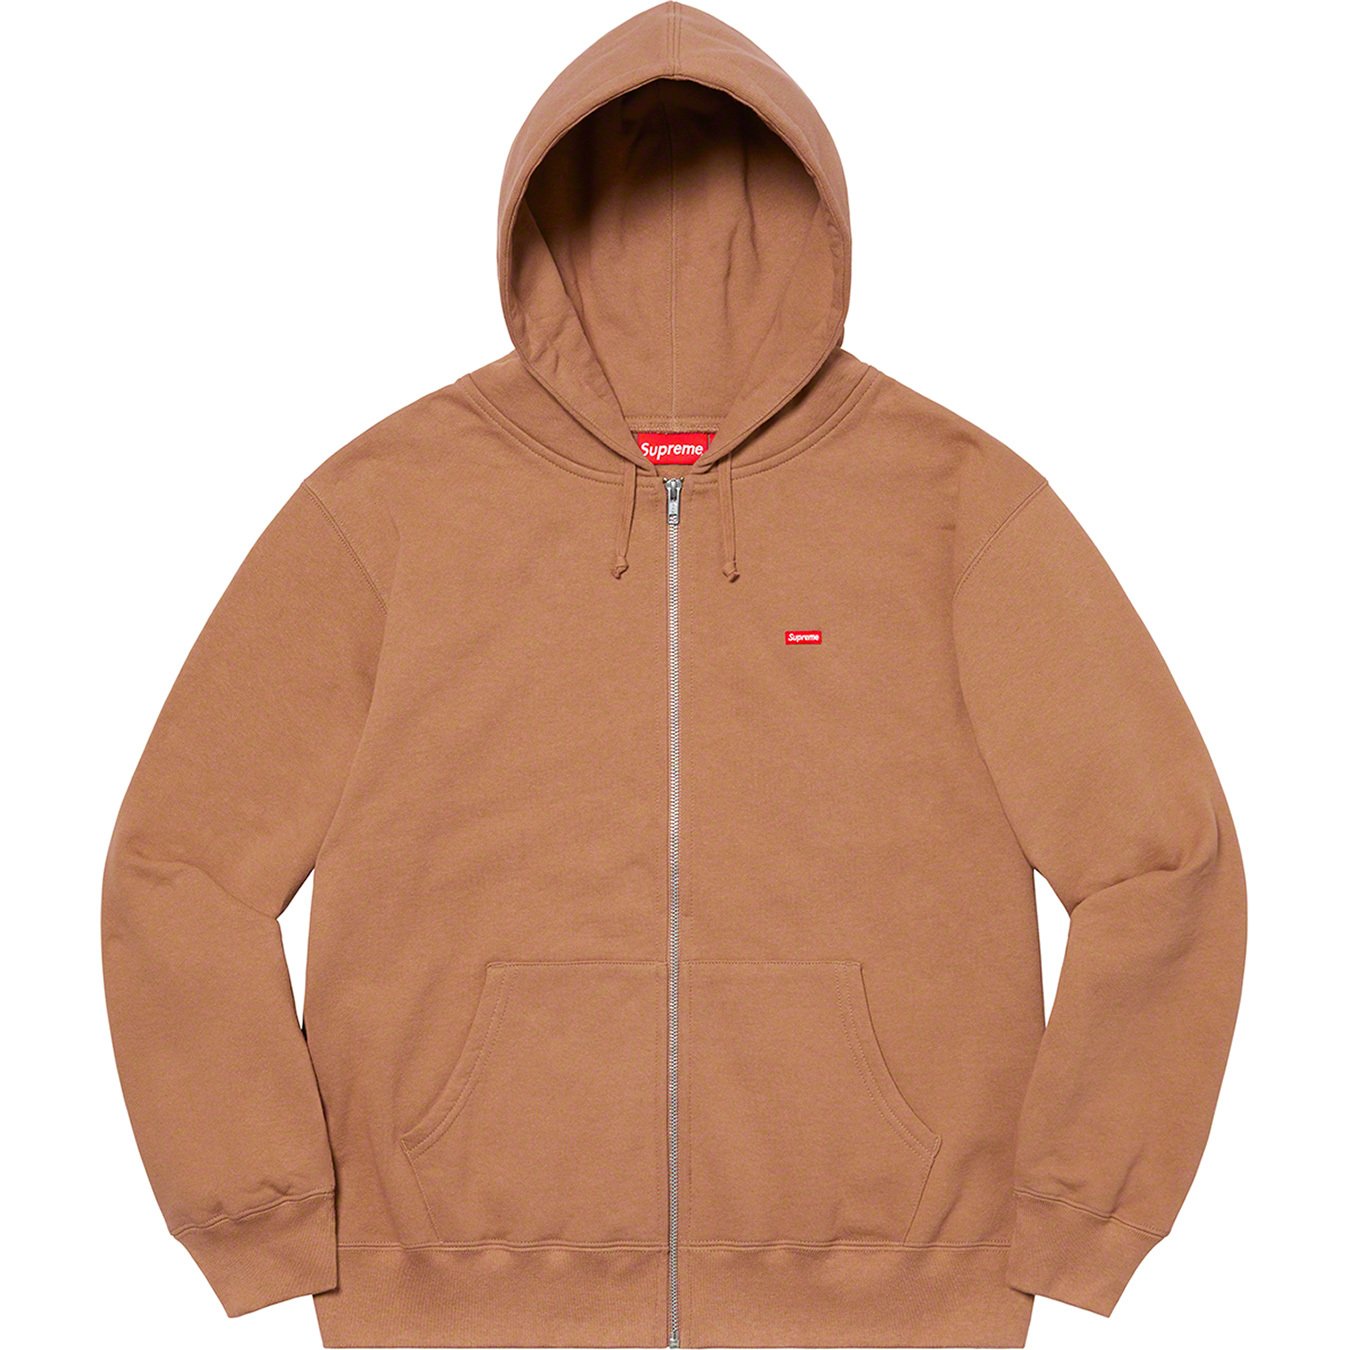 supreme small box logo zip up hoodie